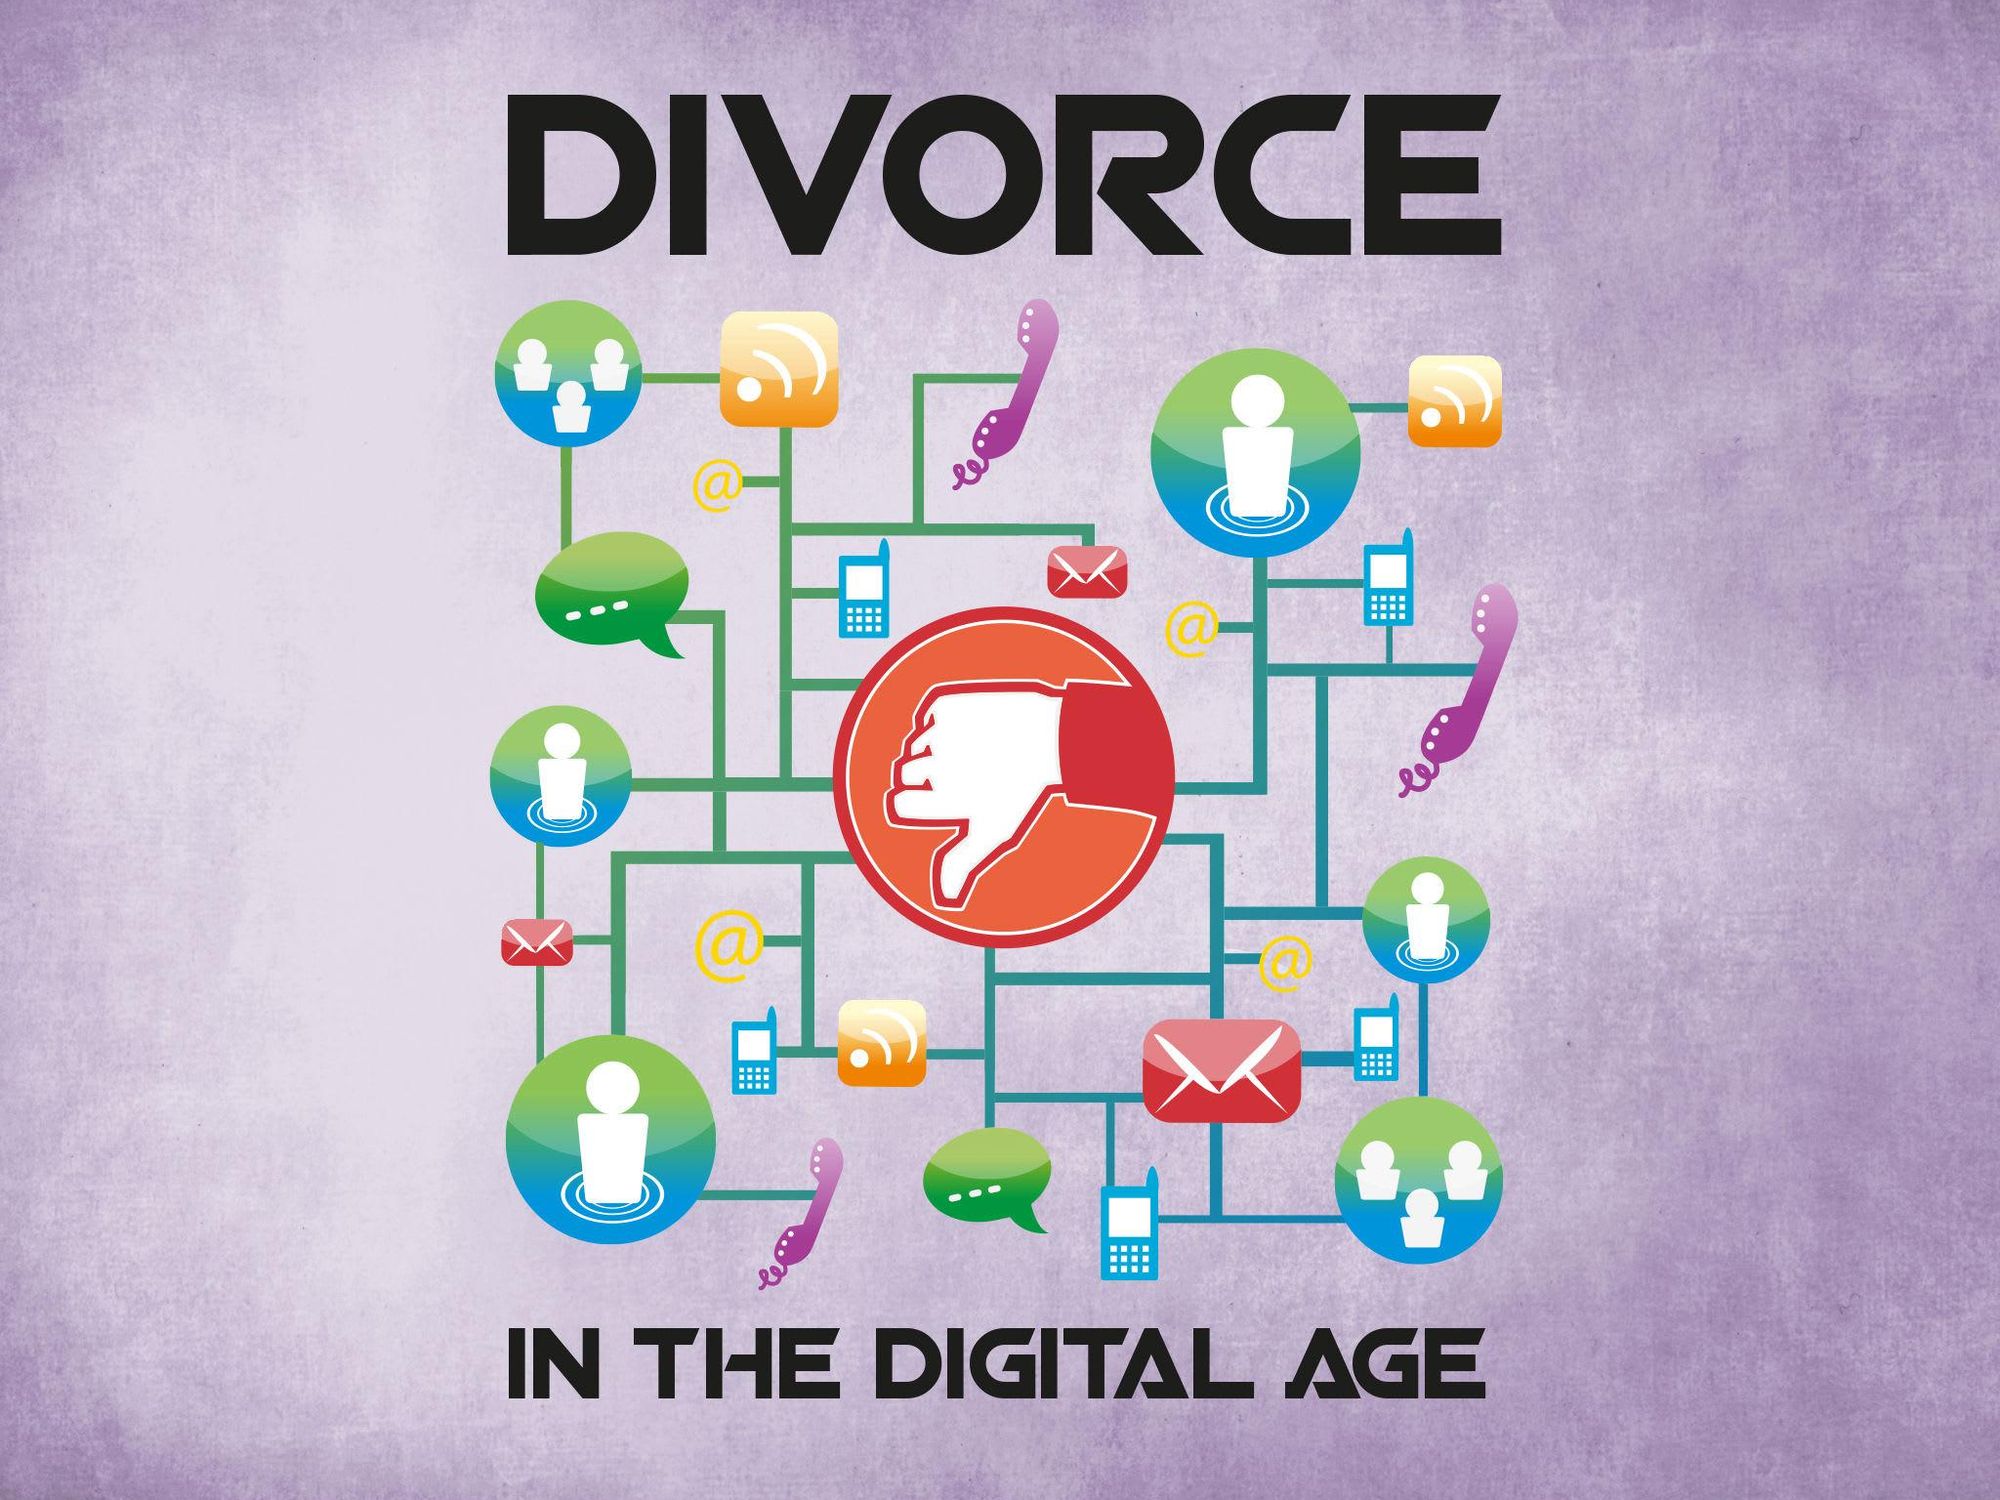 Divorce in the digital age